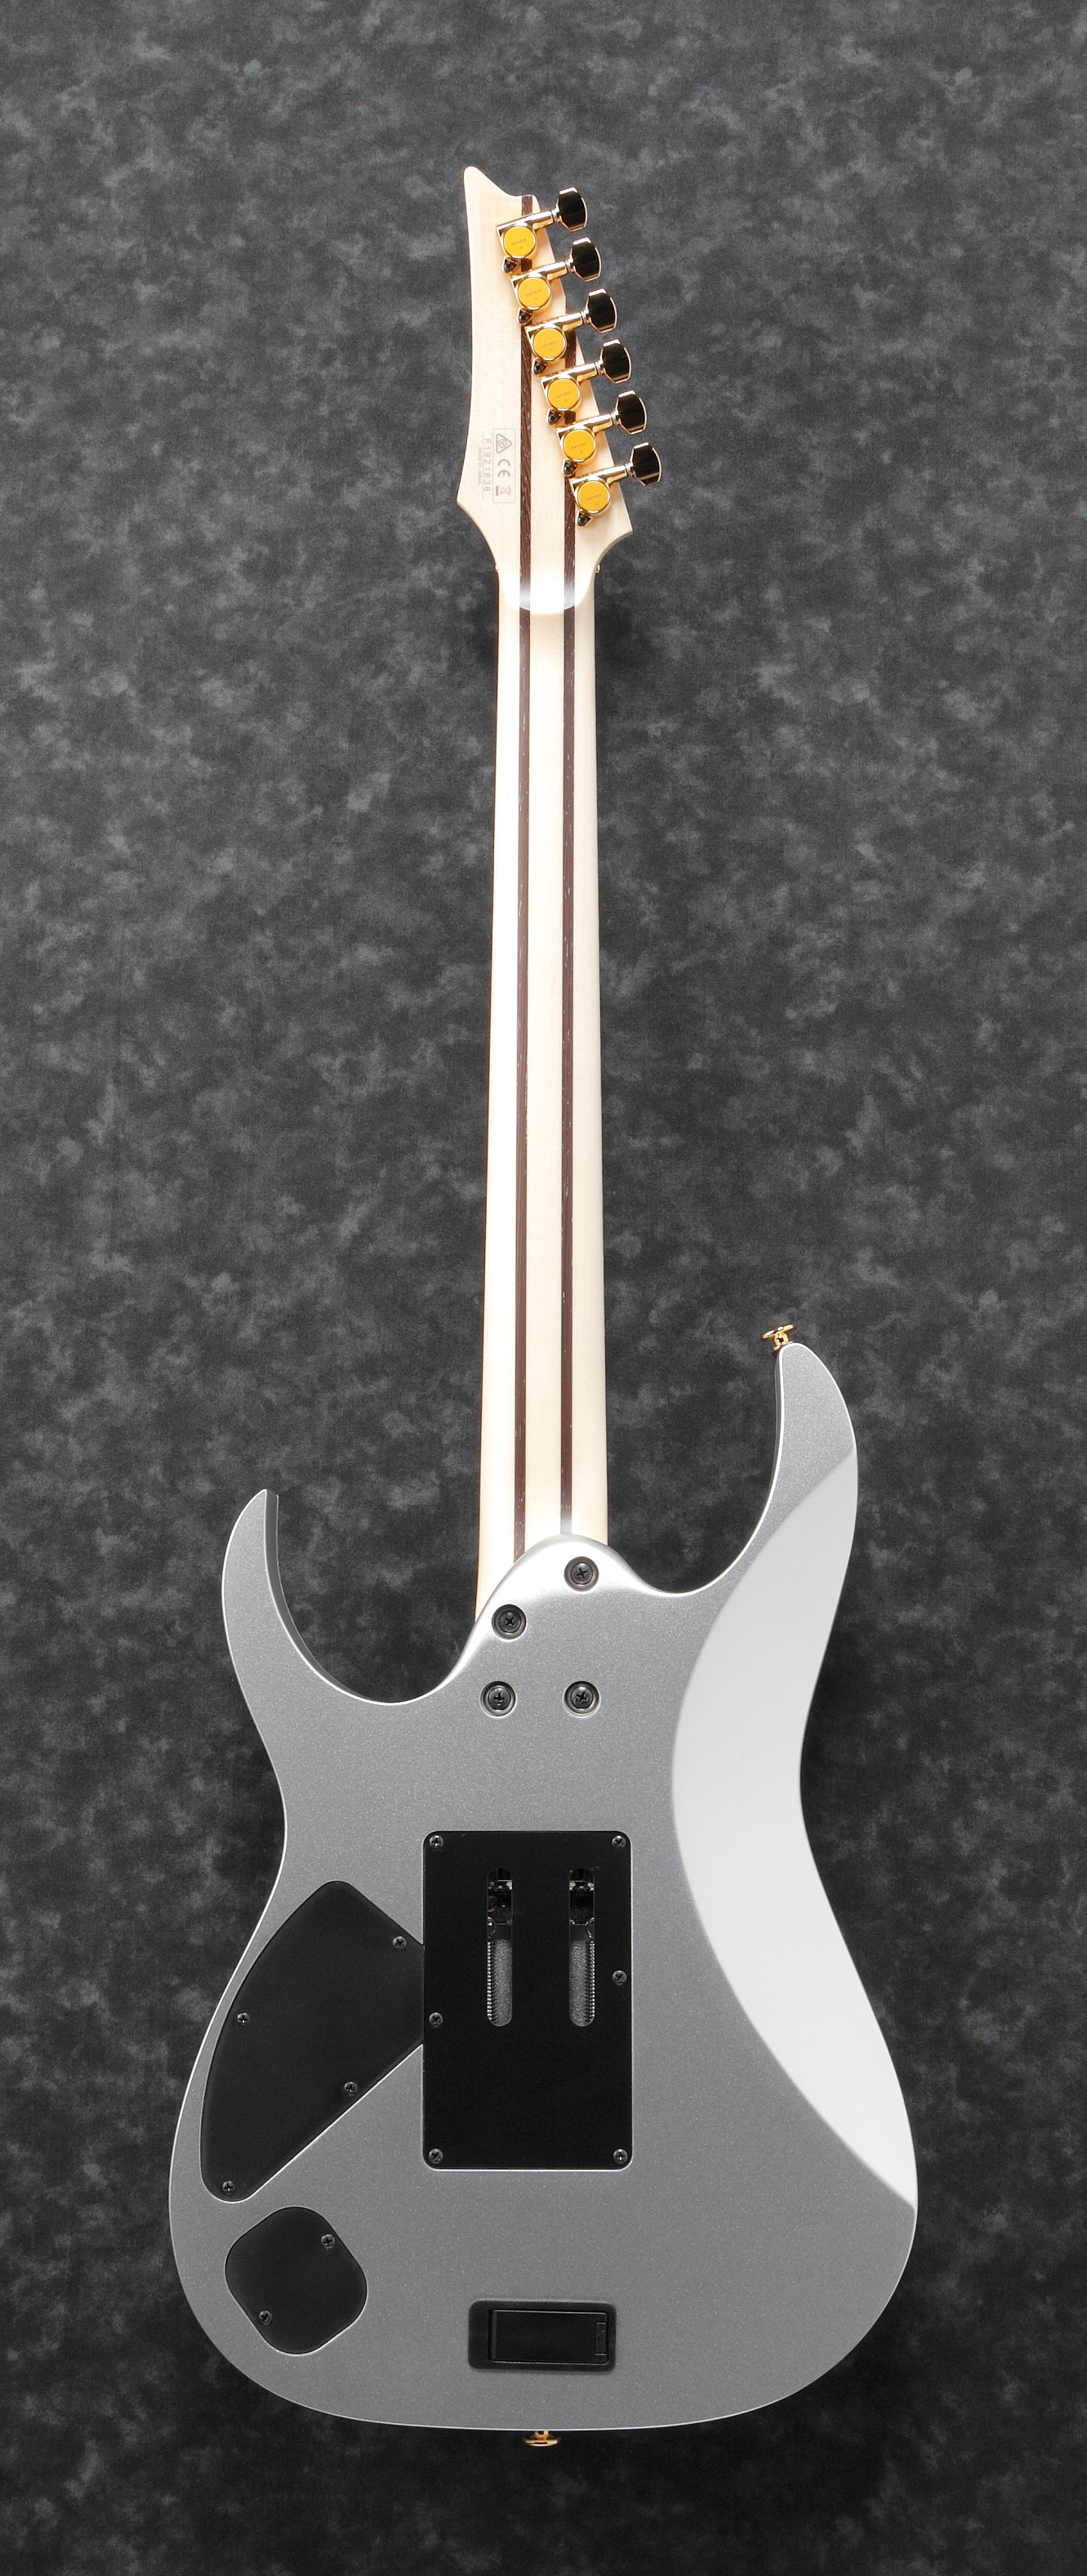 Ibanez Prestige RG5170GSVF (Silver Flat) Japan Made Electric Guitar 電結他